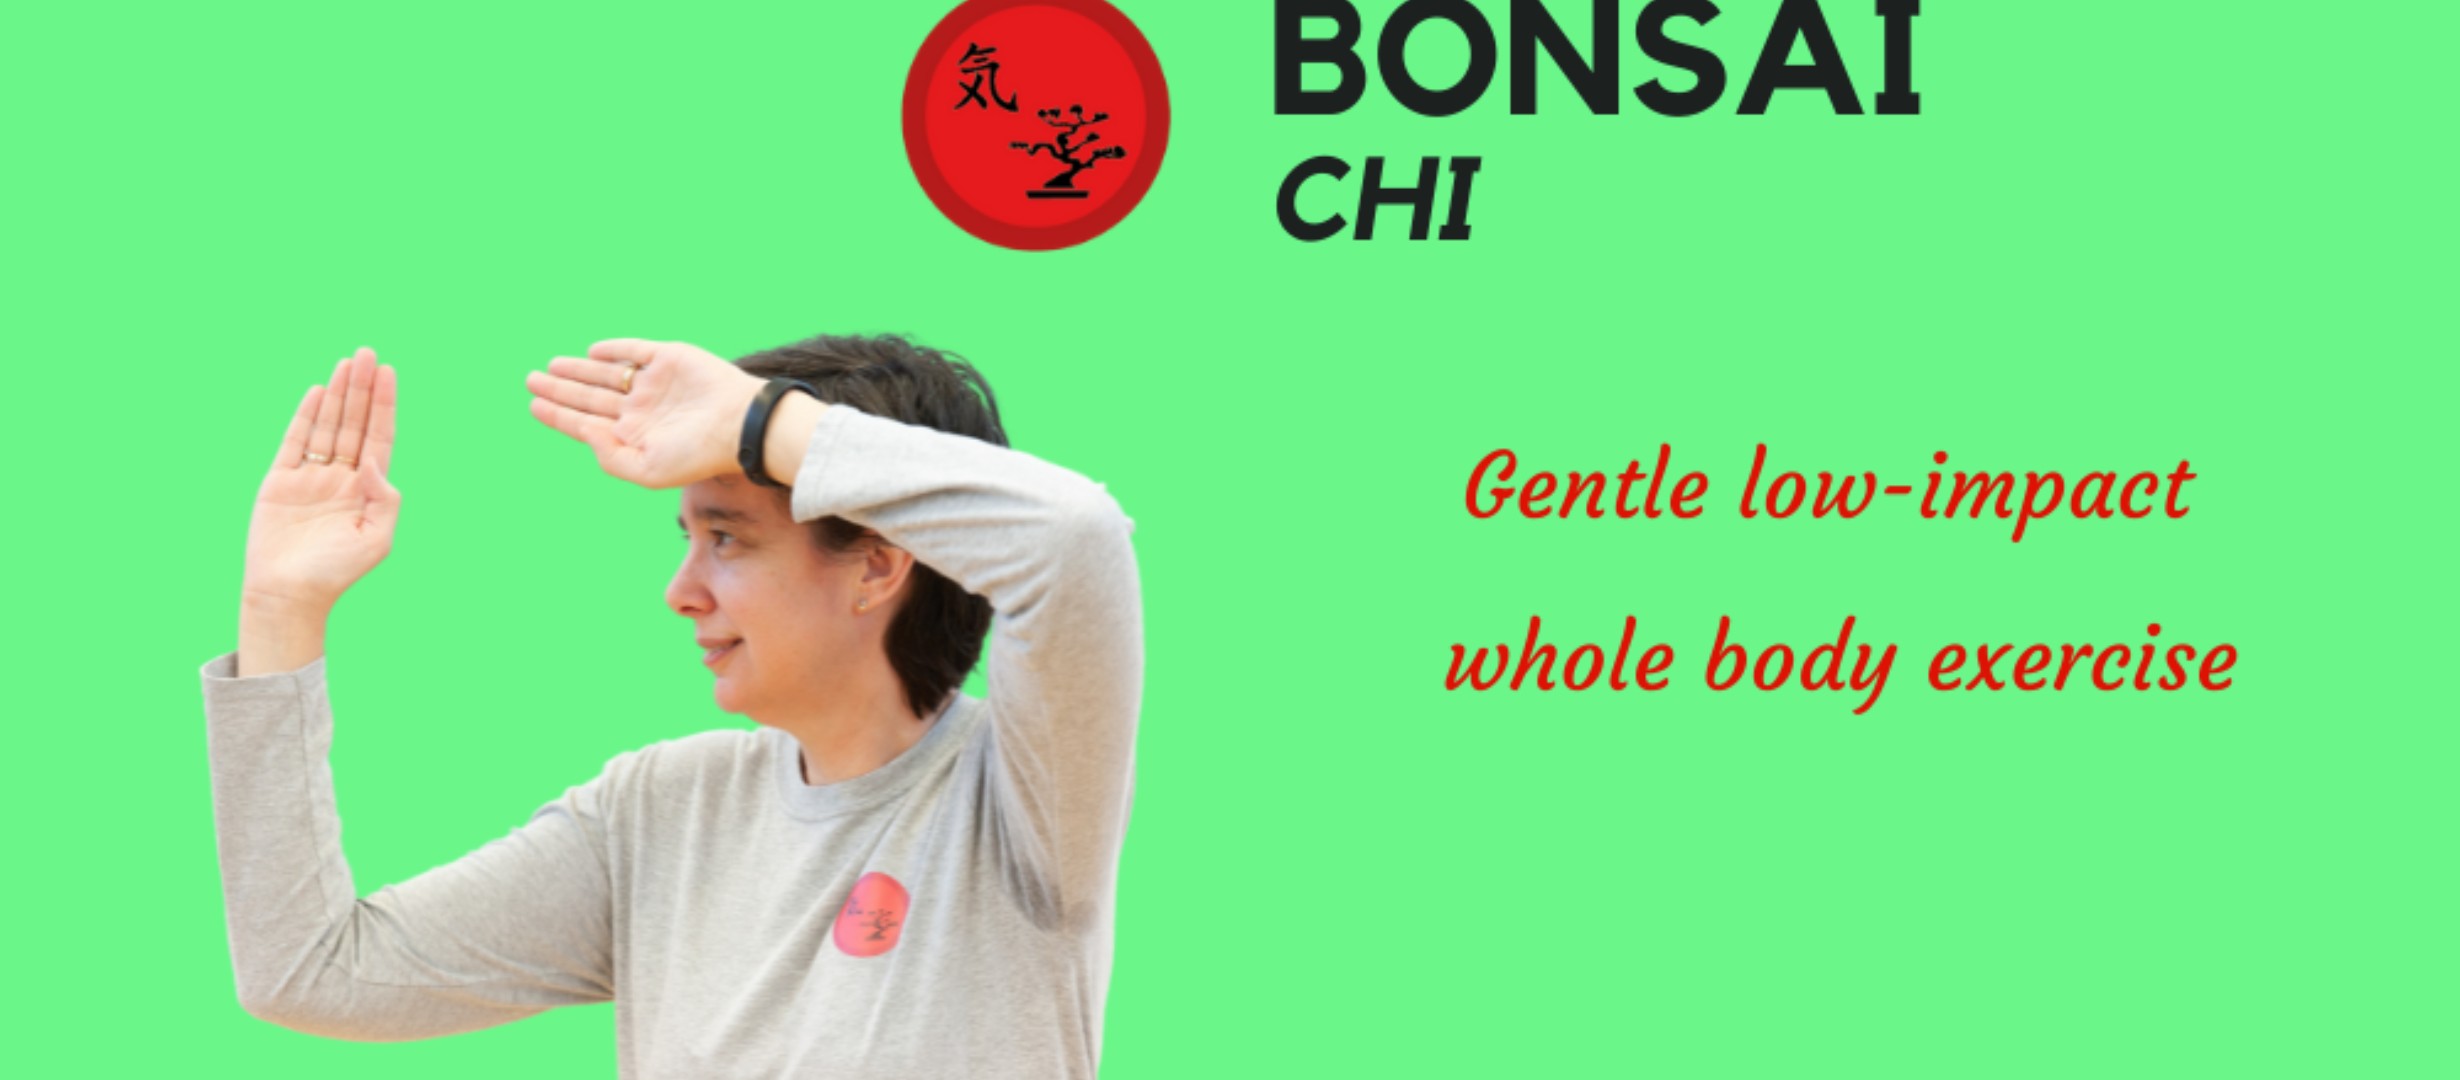 Bonsai Chi - Gentle low impact, whole body exercise